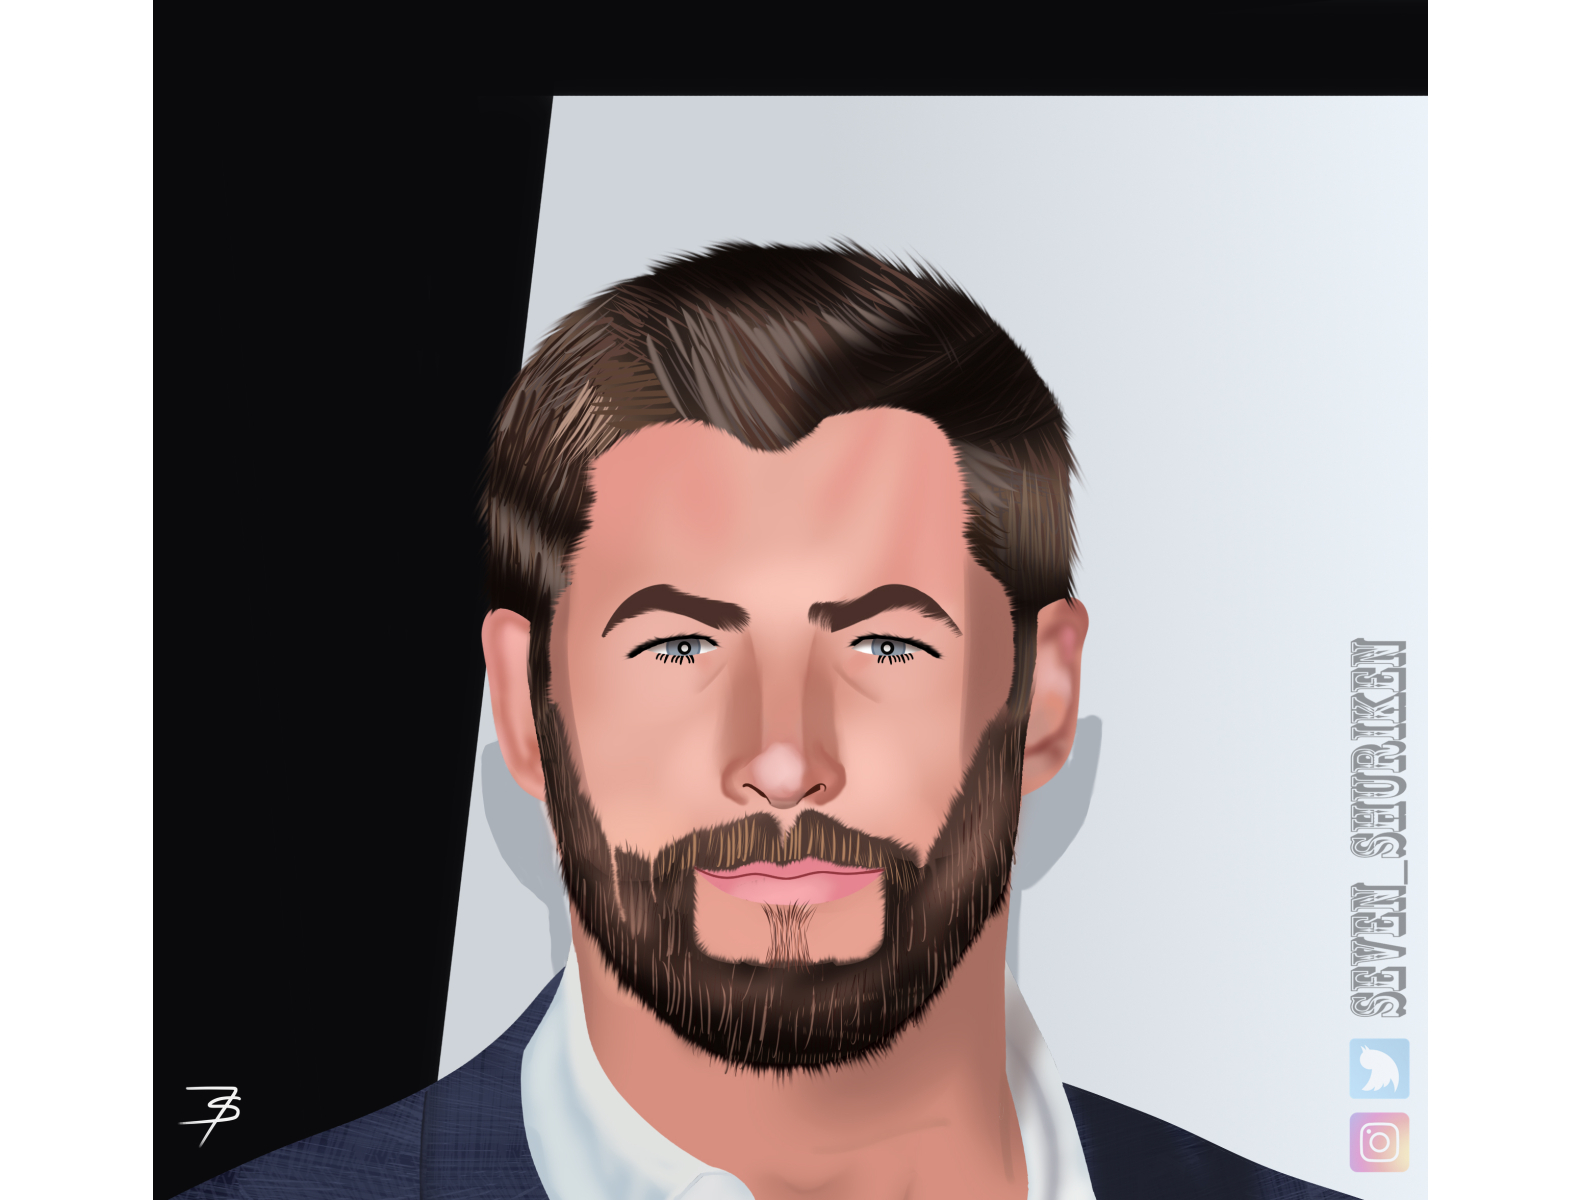 Chris Hemsworth Drawings for Sale - Pixels